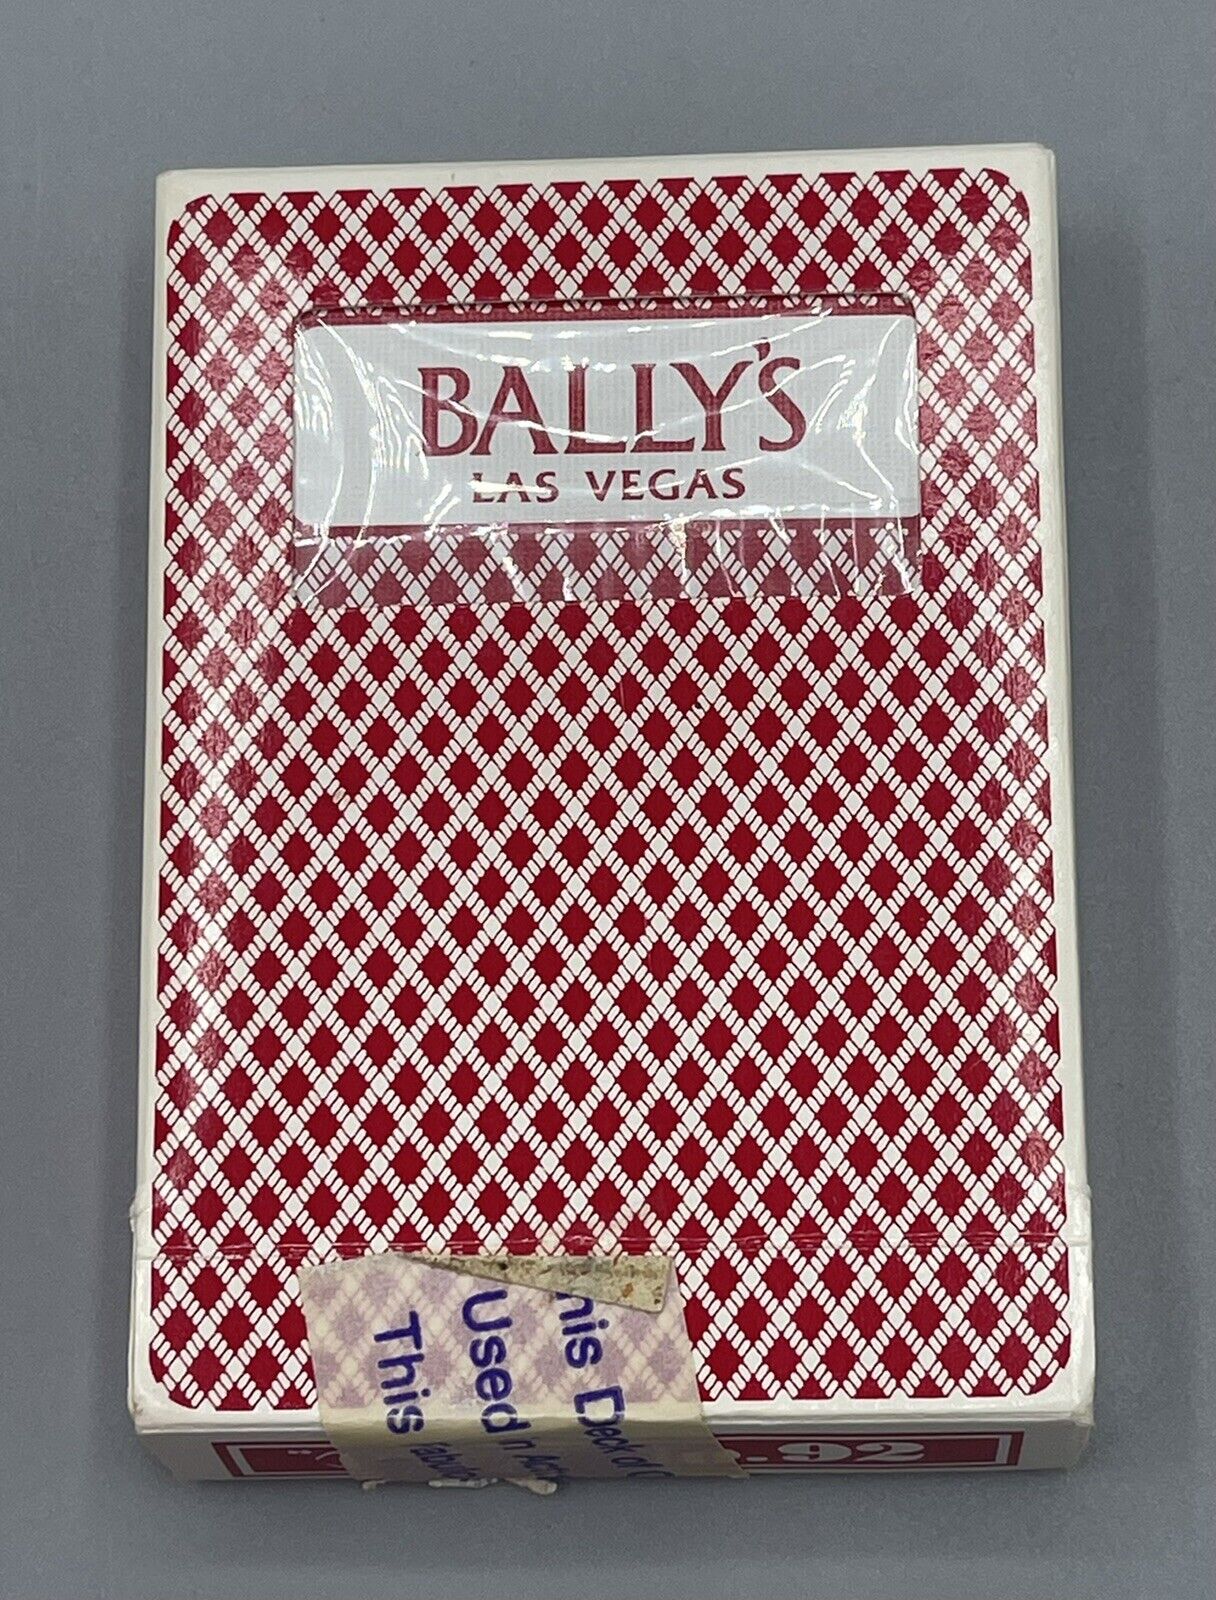 Vintage Bally's Casino Playing Cards - Las Vegas - Red